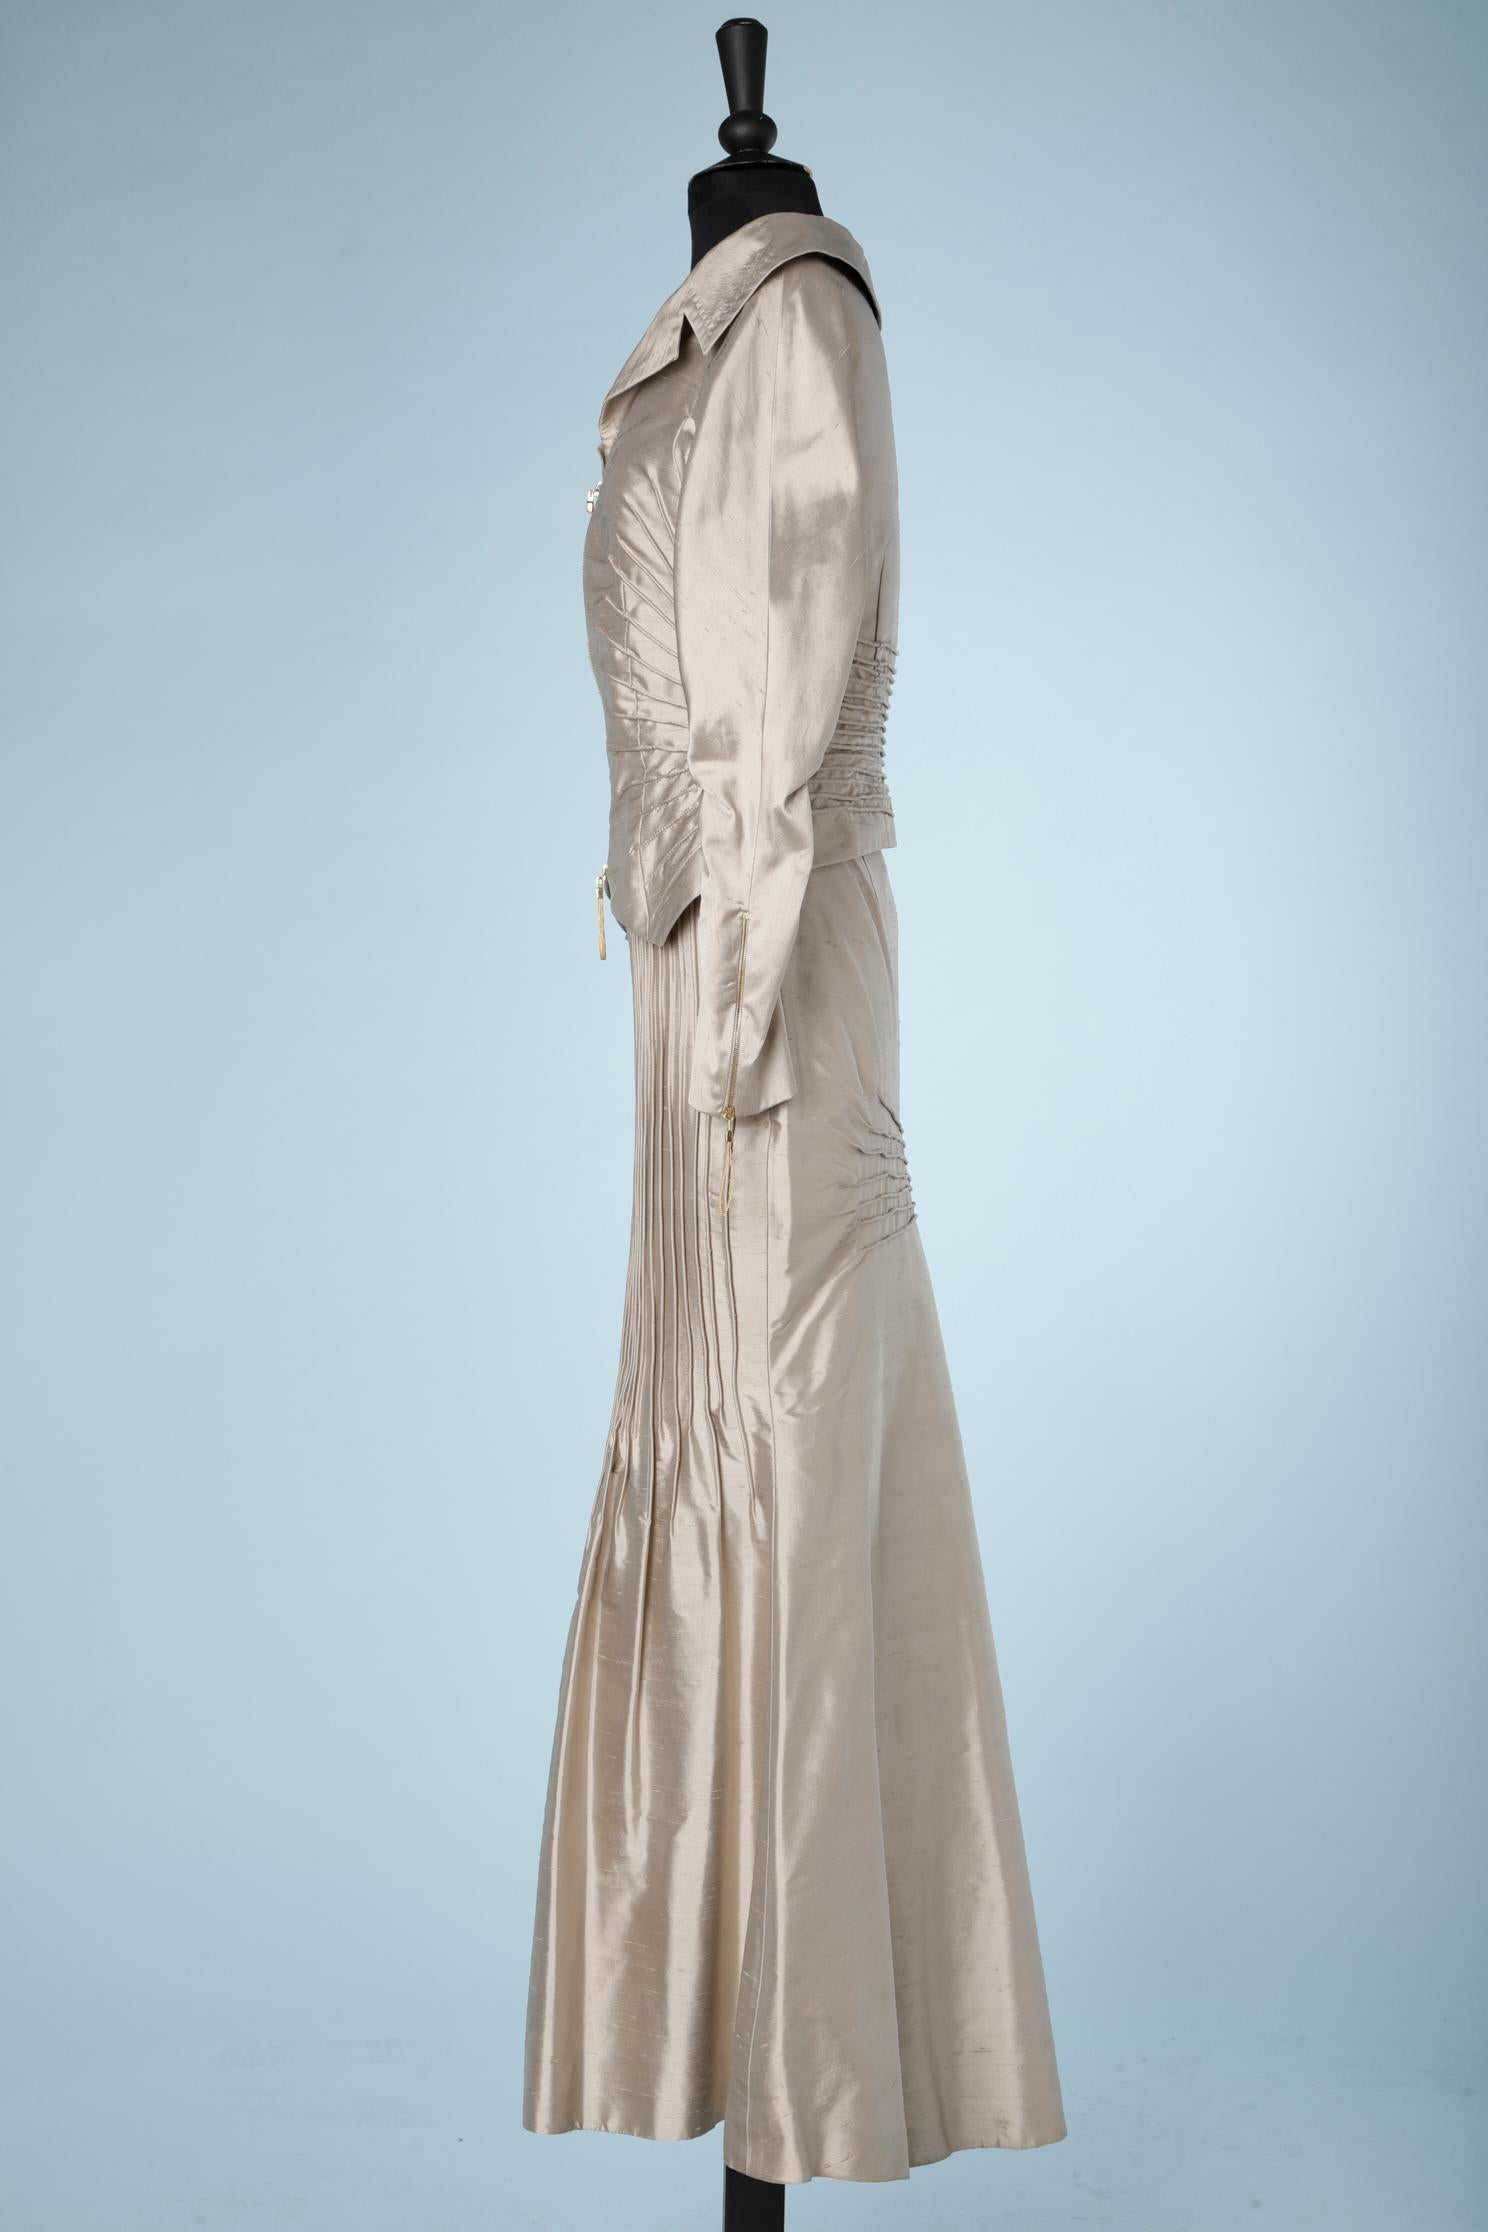 Pale grey silk evening skirt-suit Gianfranco Ferré  For Sale 1